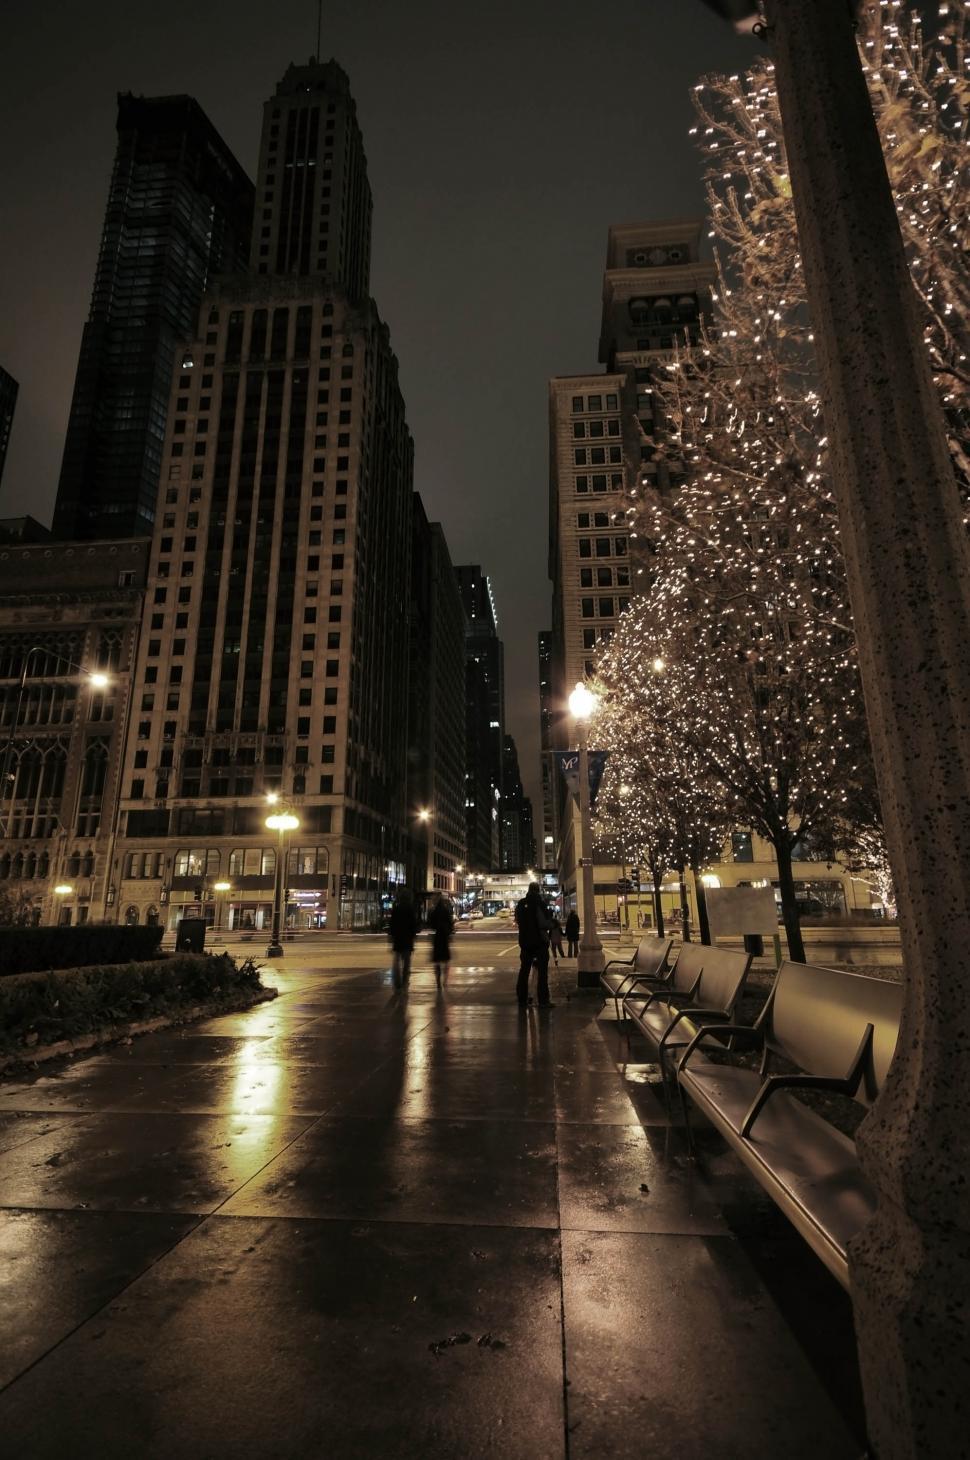 Free Image of Chicago sidewalk at night 